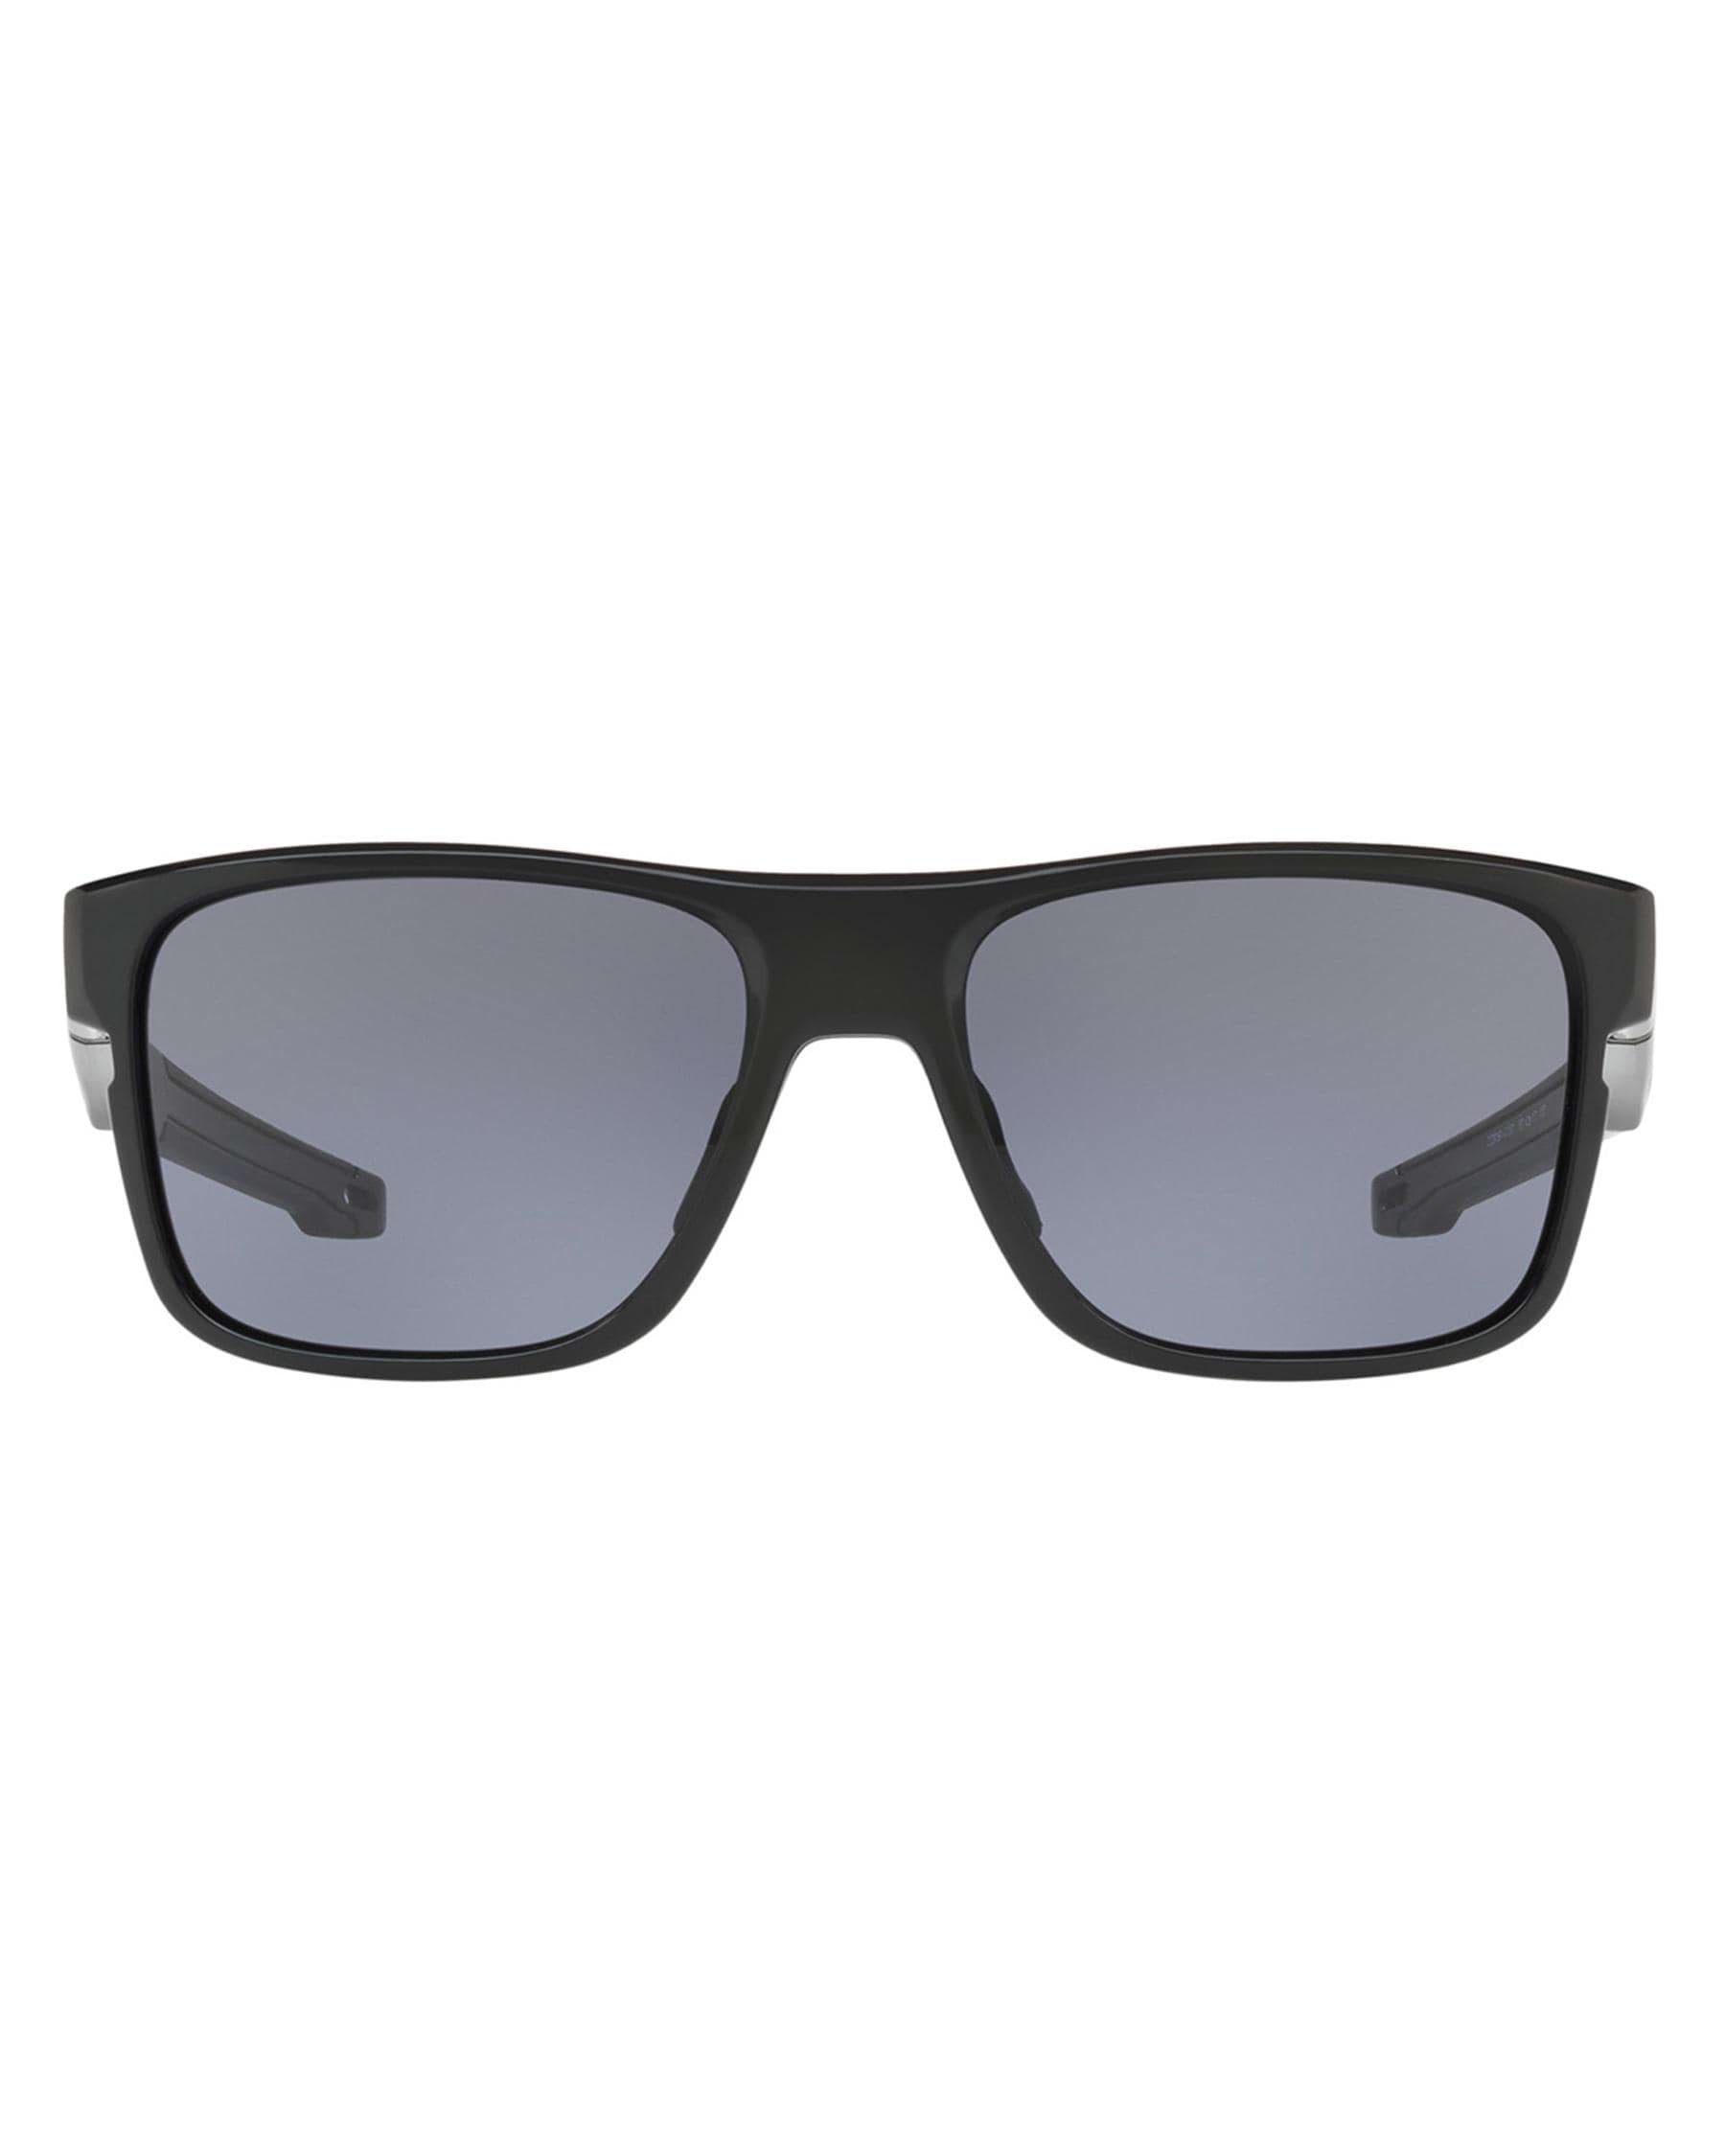 Oakley Crossrange Sunglasses In Polished Black - Fast Shipping & Easy ...